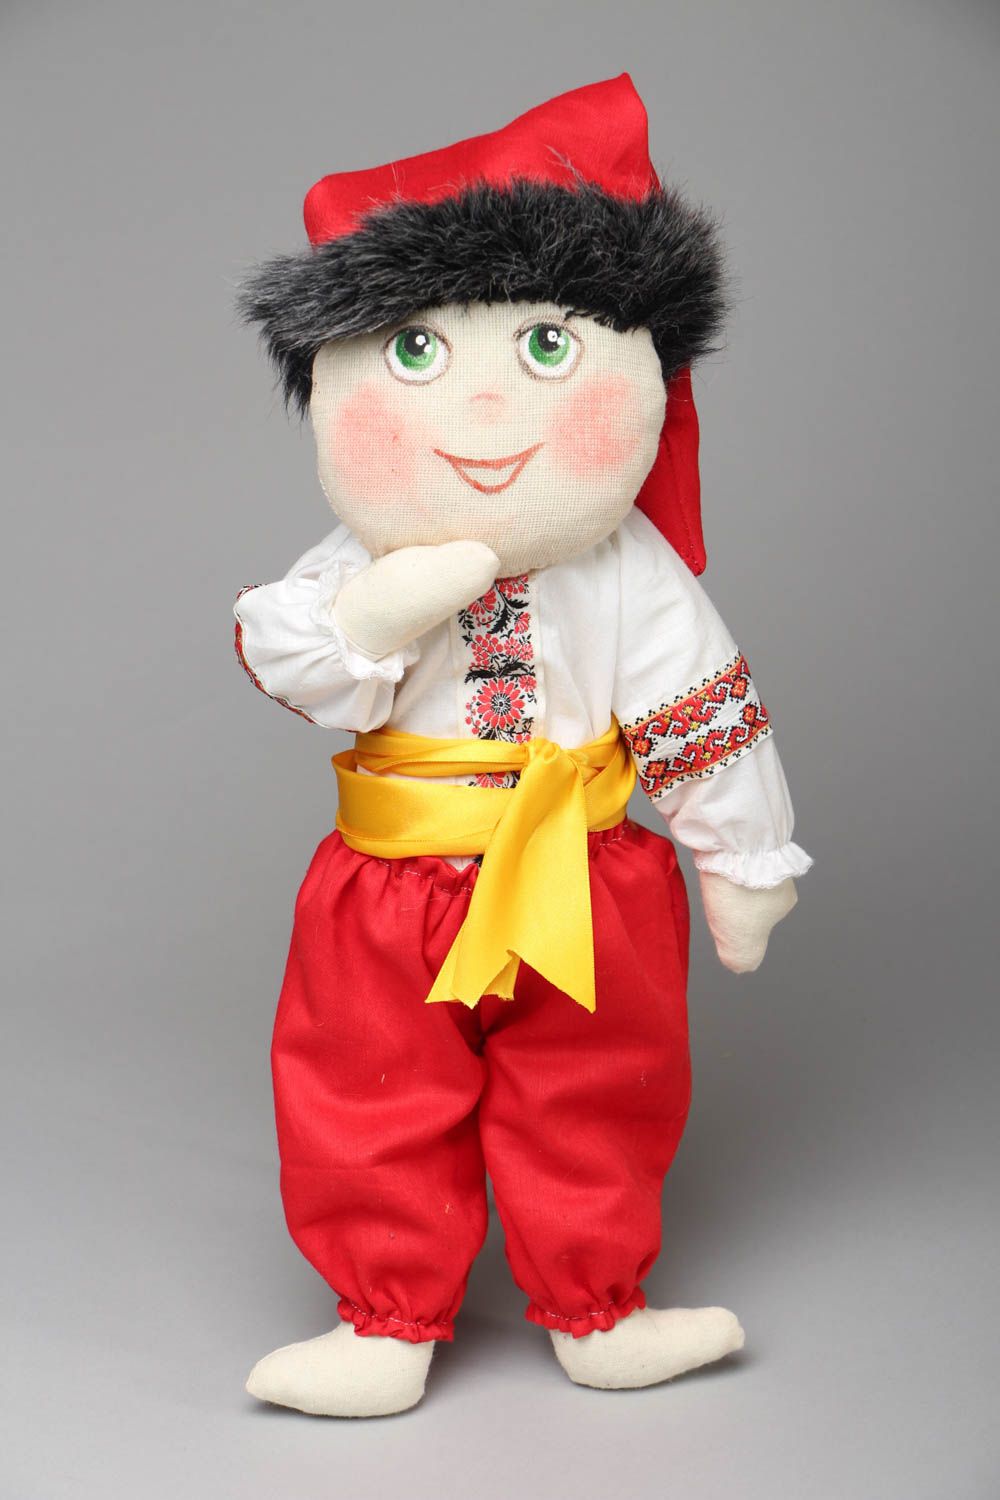 Textil Puppe Junge in Ethno Kleidung foto 1